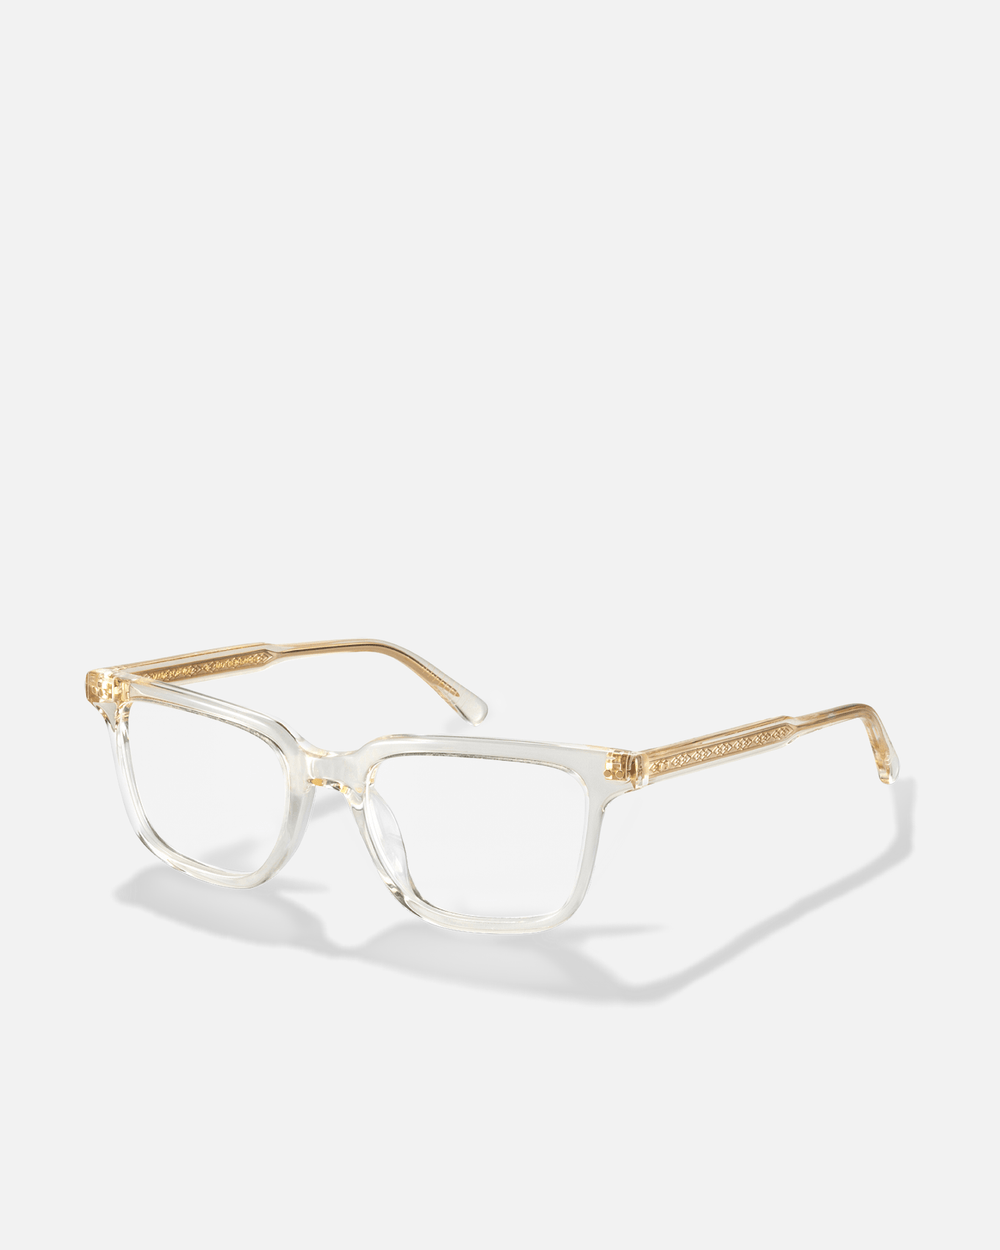 PEPINO Bio-Acetate Square Frame Sunglasses for Men & Women | Champagne | Sunnies Collection | OLLU